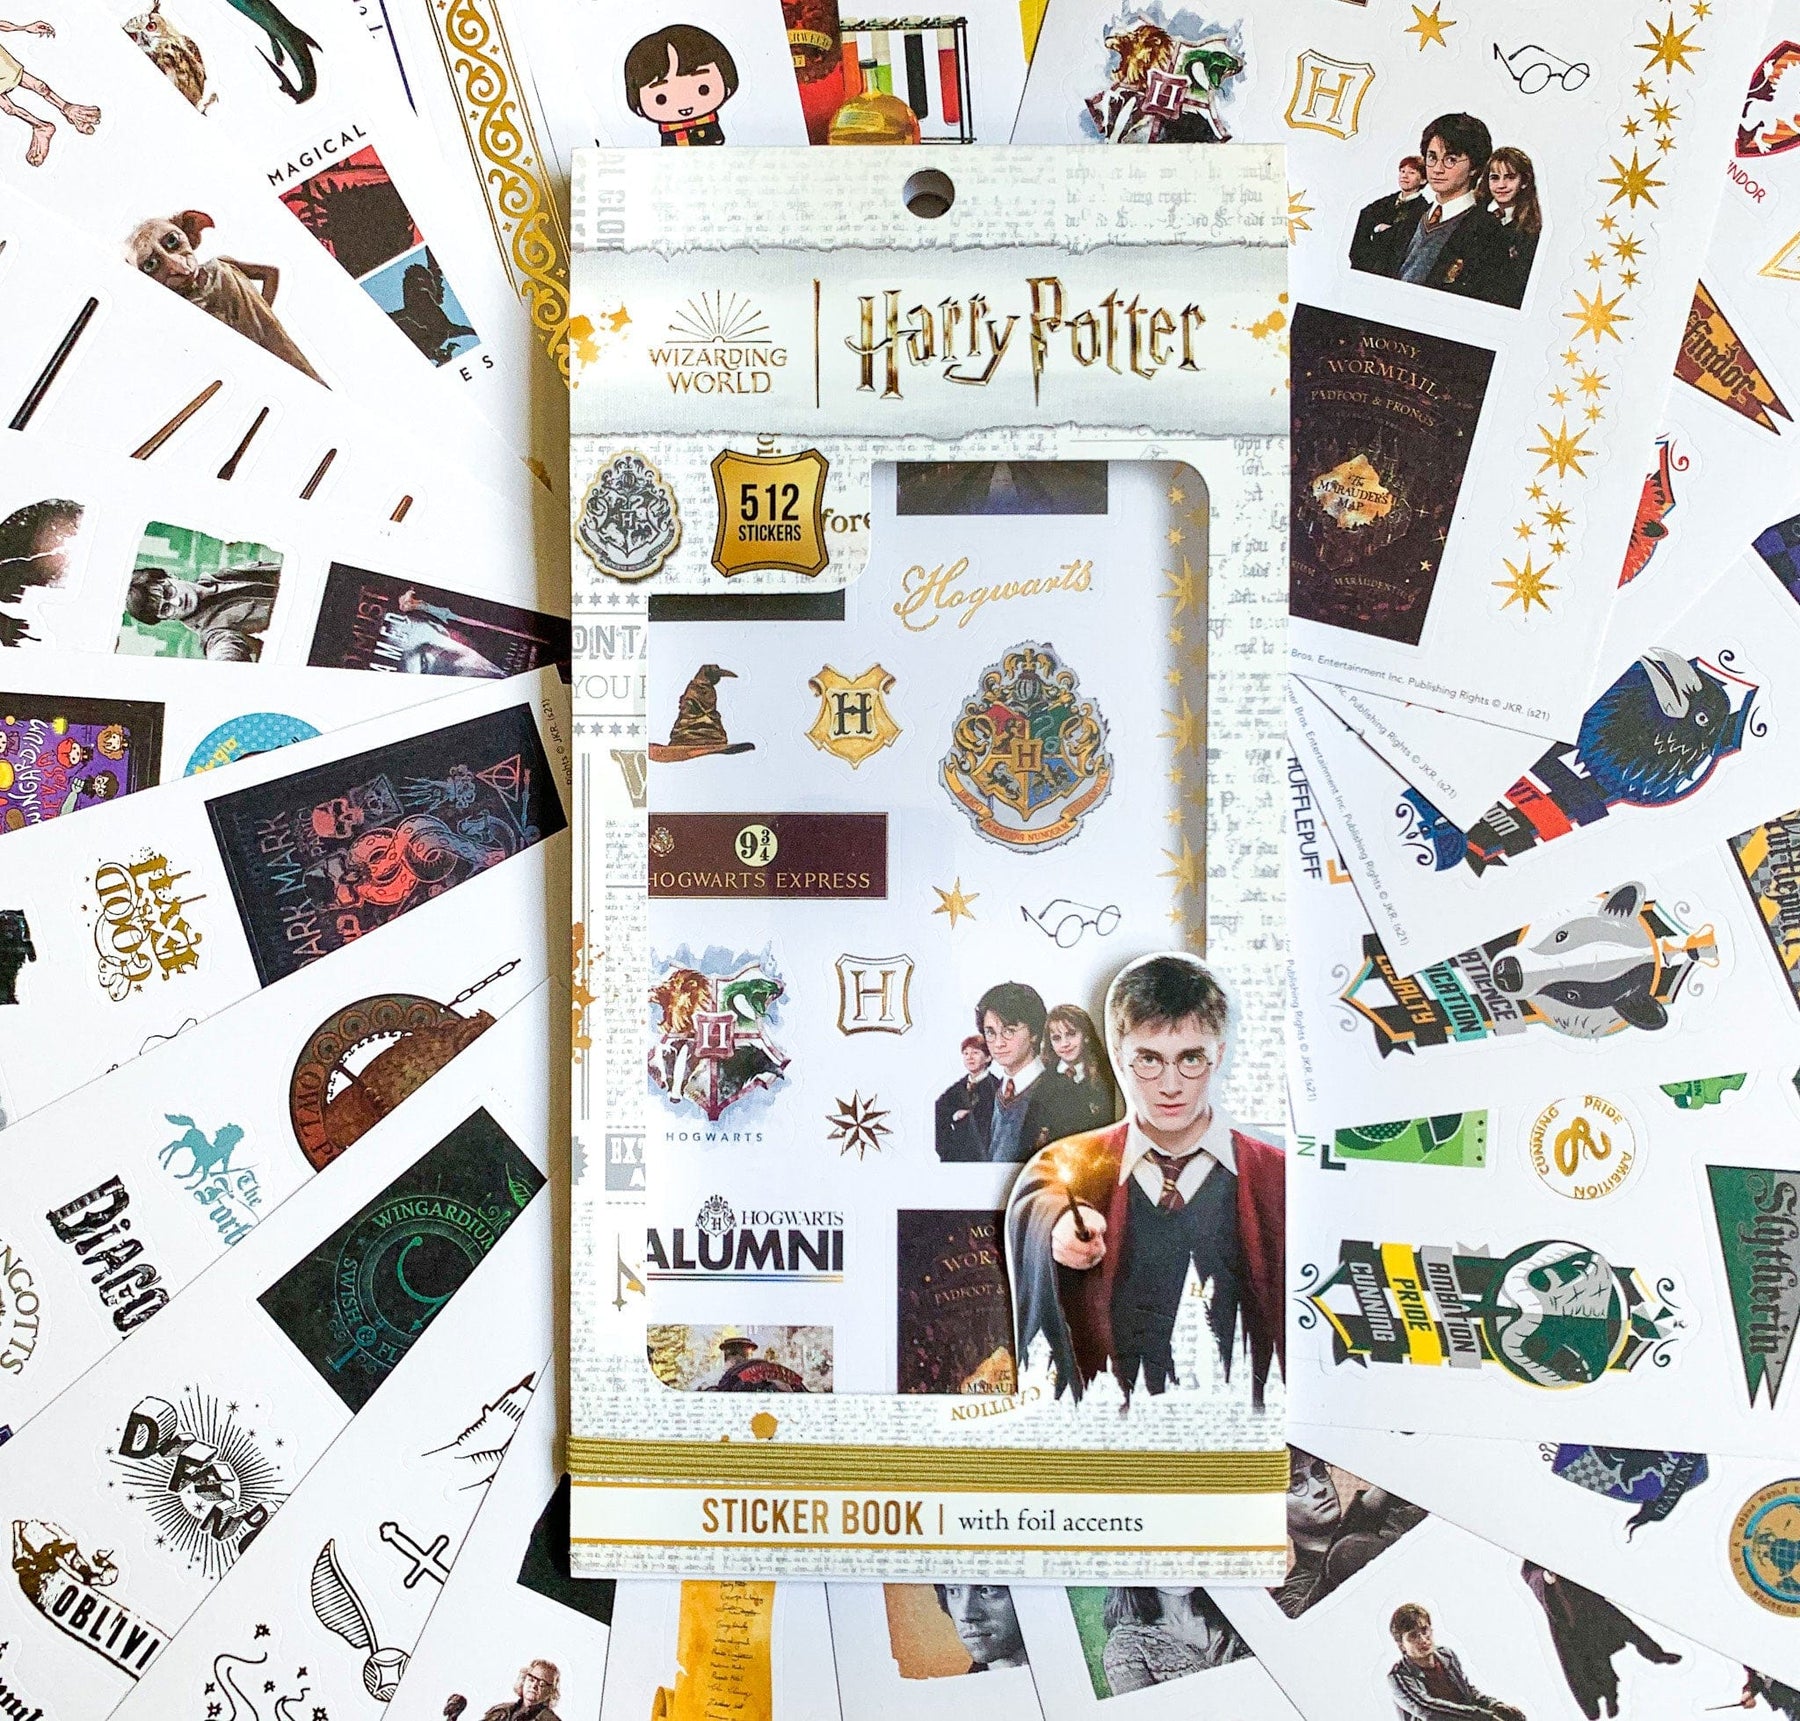 Paper House Washi Tape 2 Pkg Harry Potter Quidditch